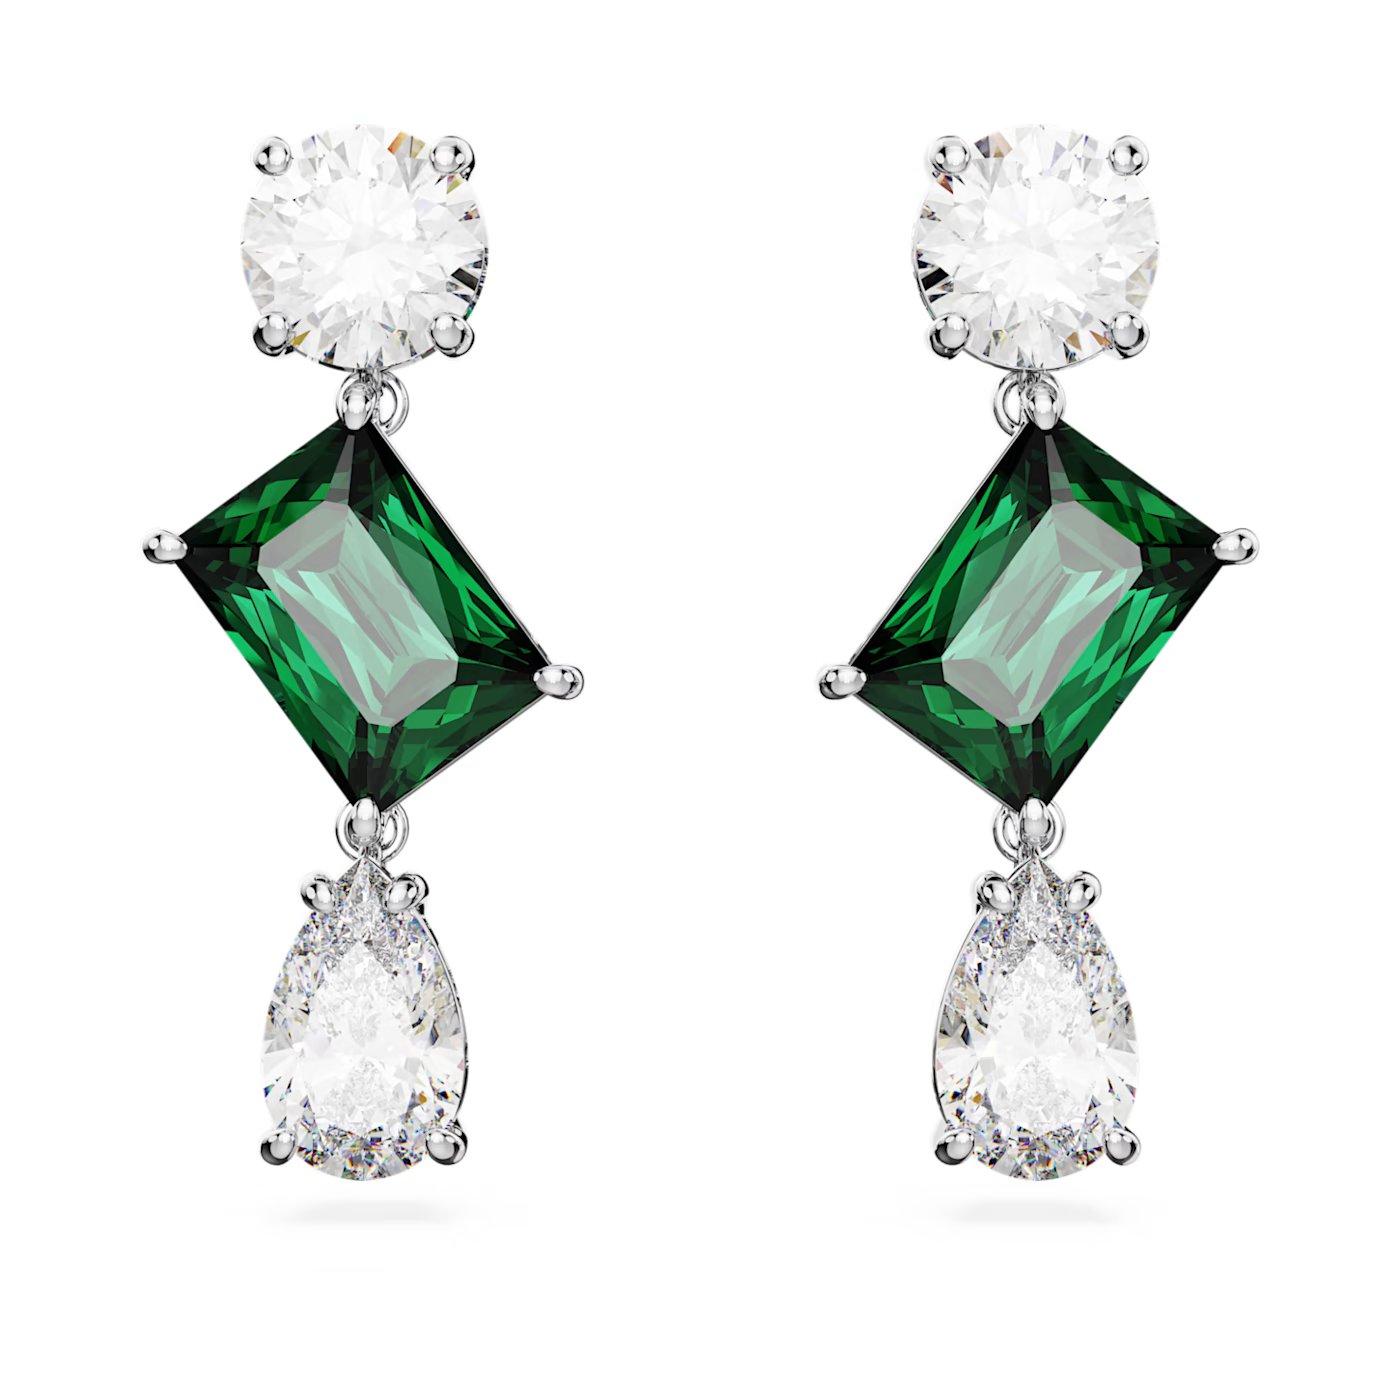 64dcc1c3a2cbb_mesmera-drop-earrings--mixed-cuts--green--rhodium-plated-swarovski-5665878.jpg